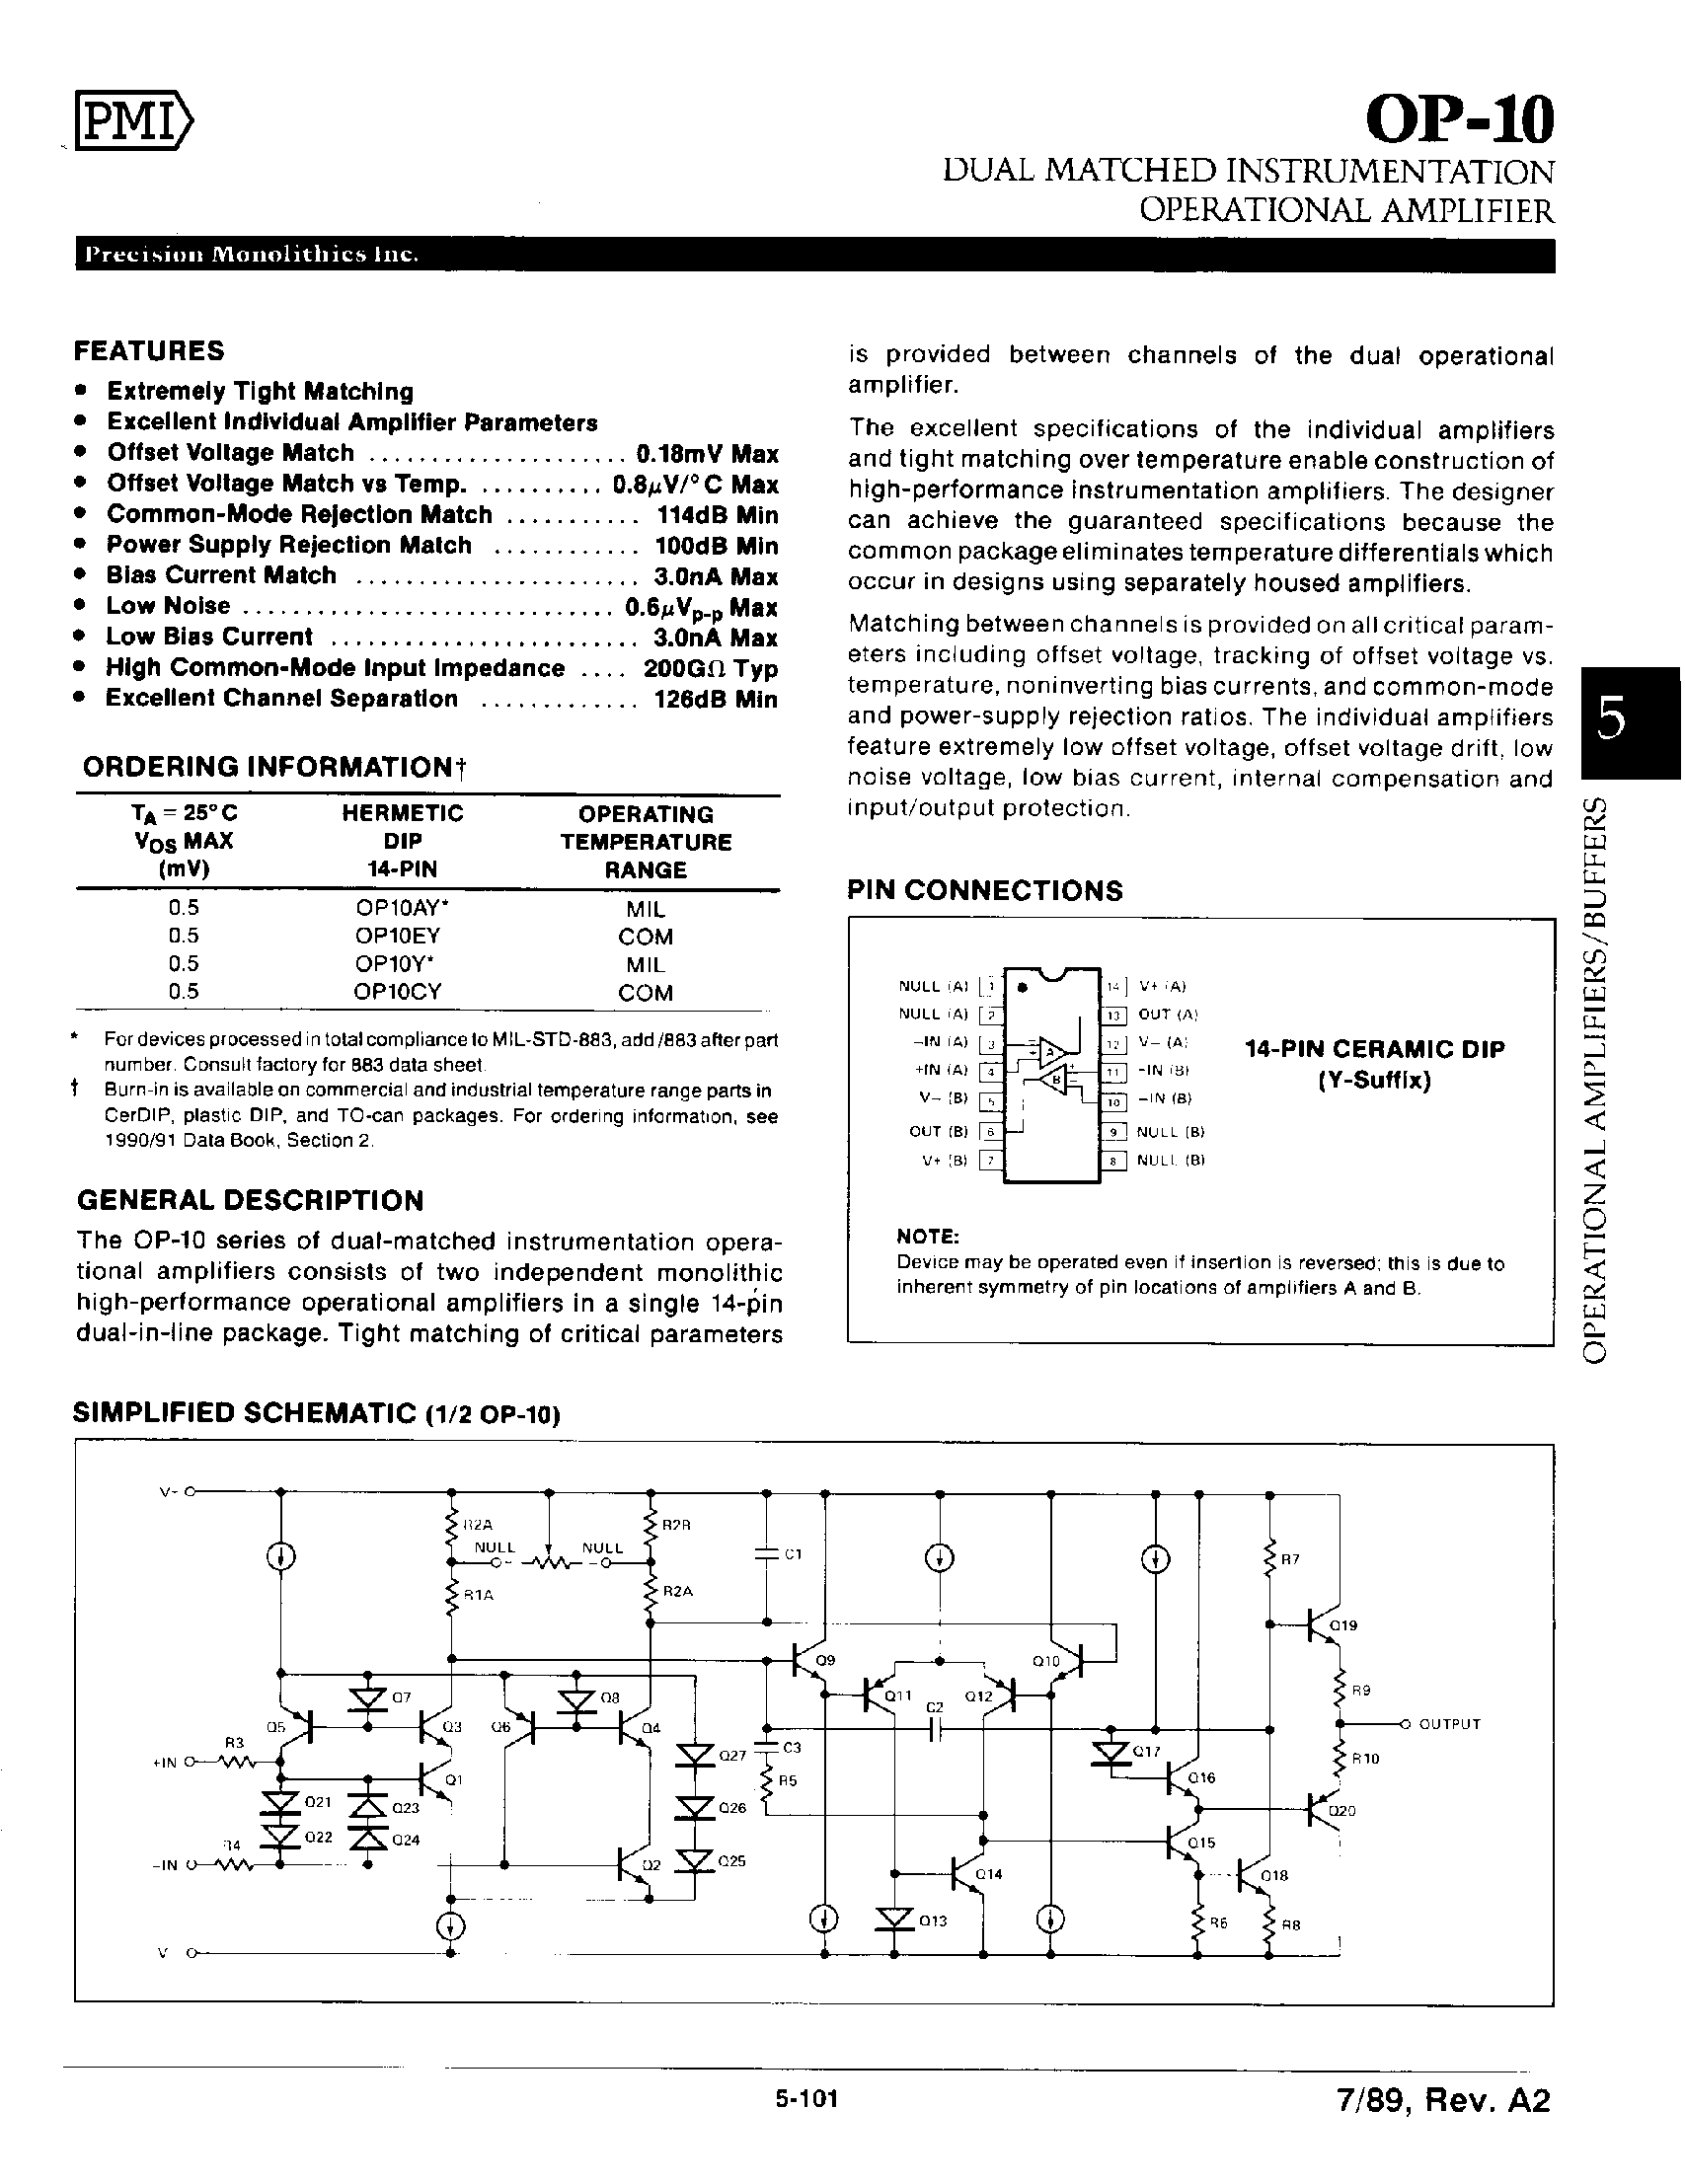 Даташит OP10 - Dual Matched Instrumentation Operational Amplifier страница 1